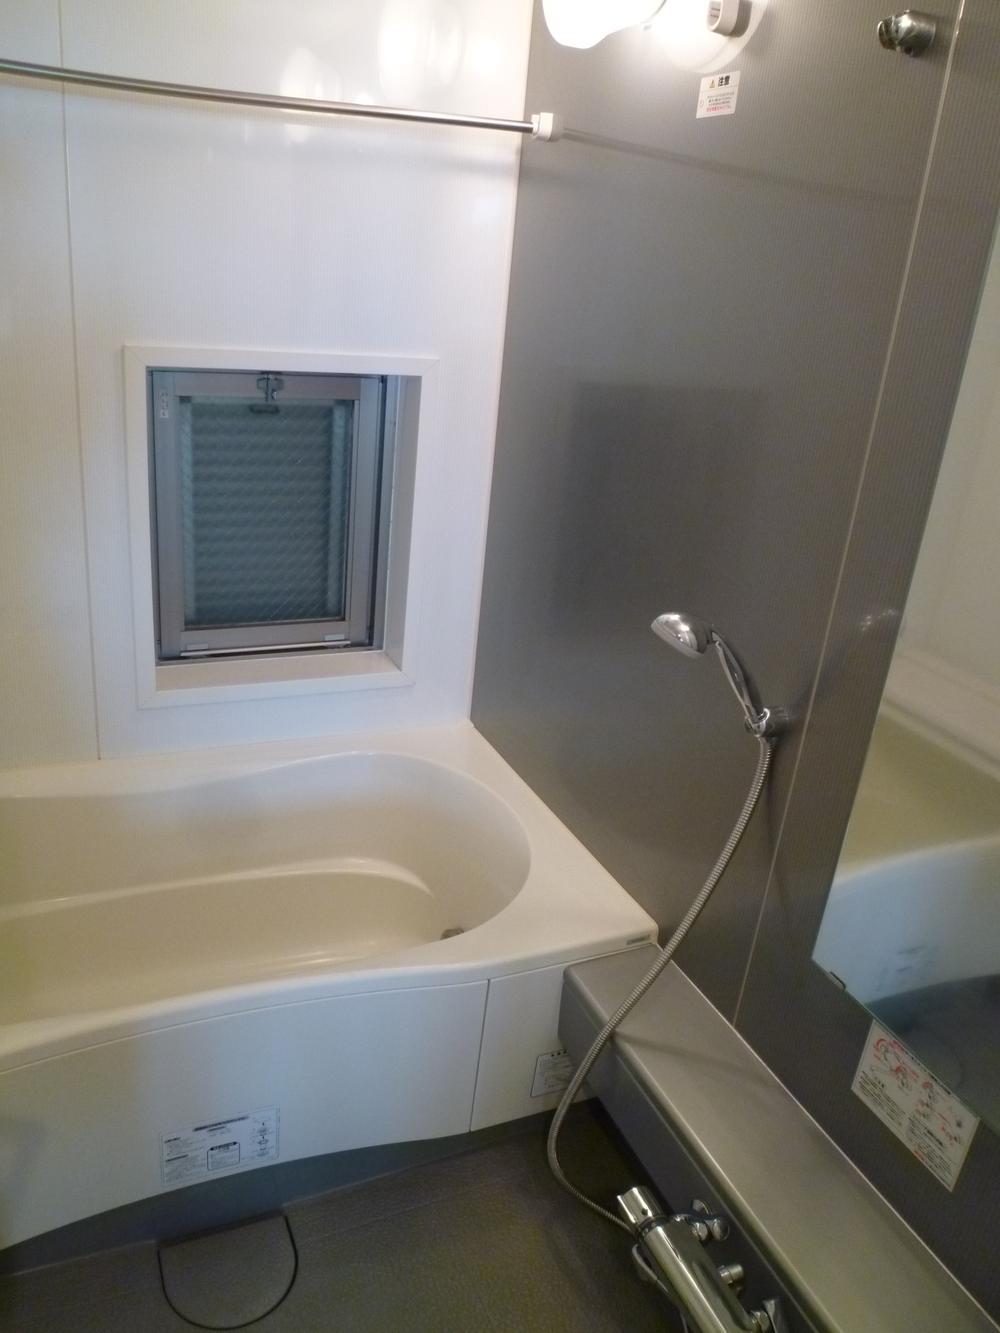 Bathroom. Bathroom with a ventilation window